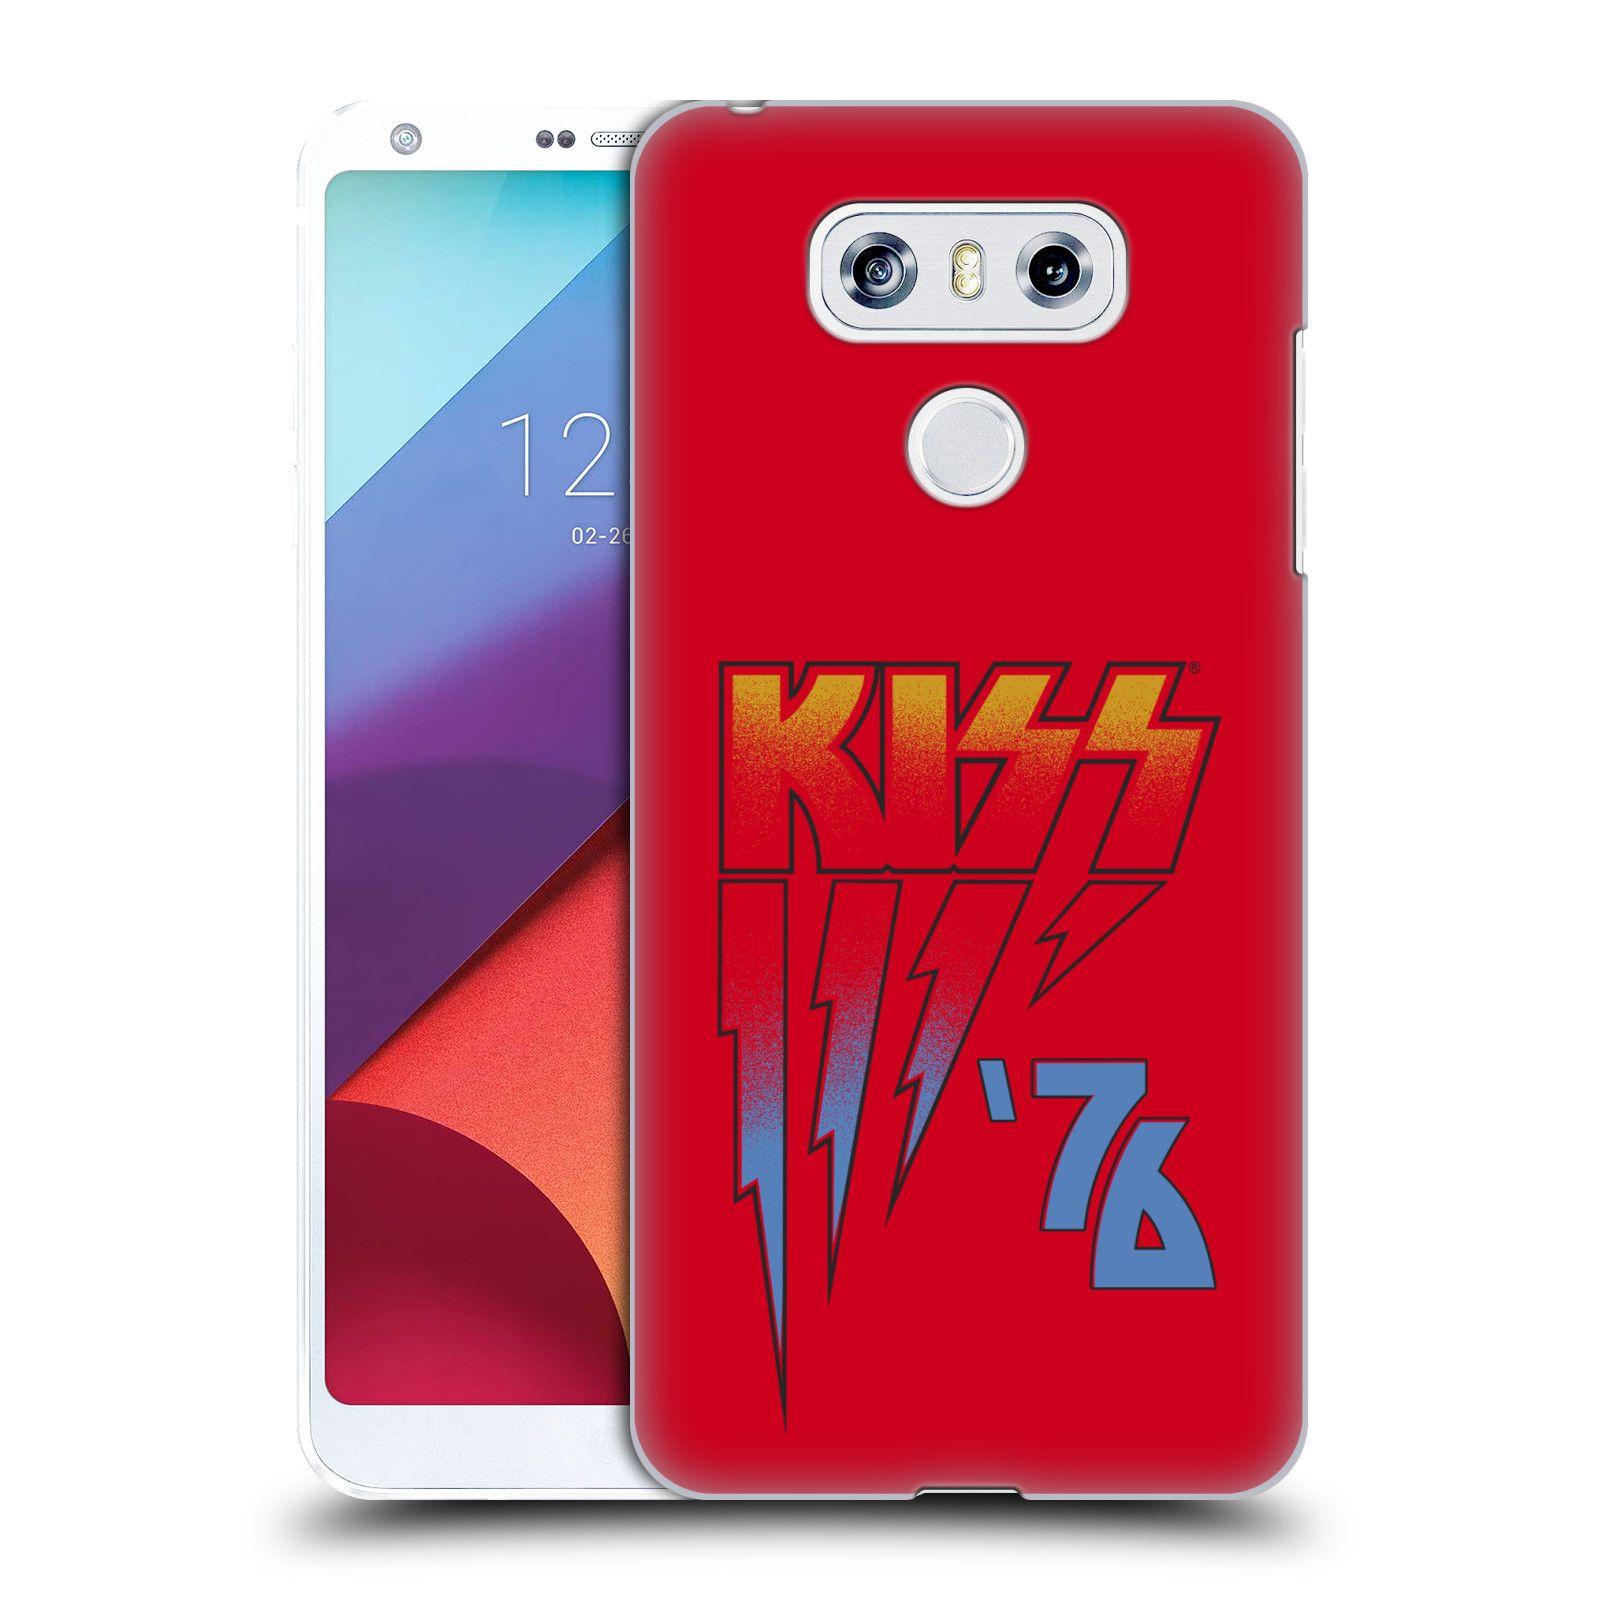 LG Phone Logo - OFFICIAL KISS BAND LOGO HARD BACK CASE FOR LG PHONES 1 | eBay